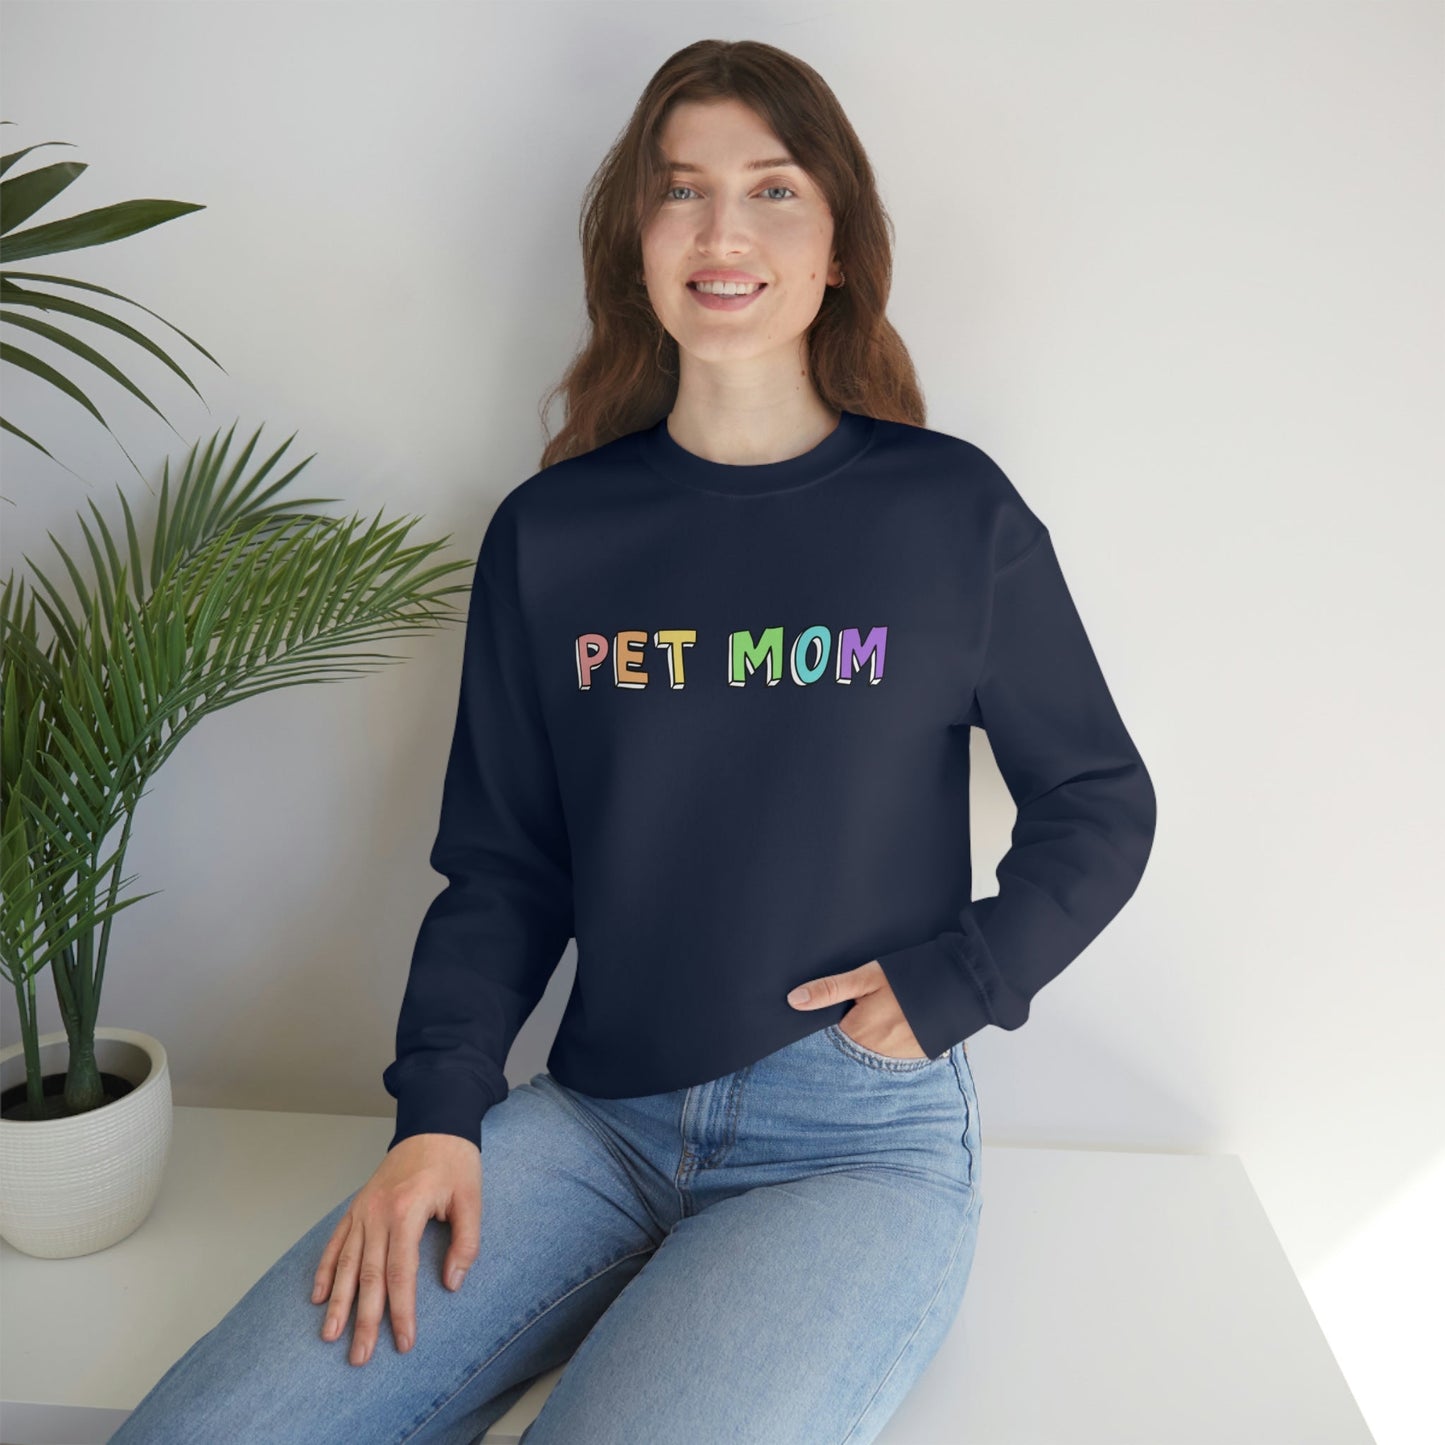 Pet Mom | Crewneck Sweatshirt - Detezi Designs-23274670953479858195